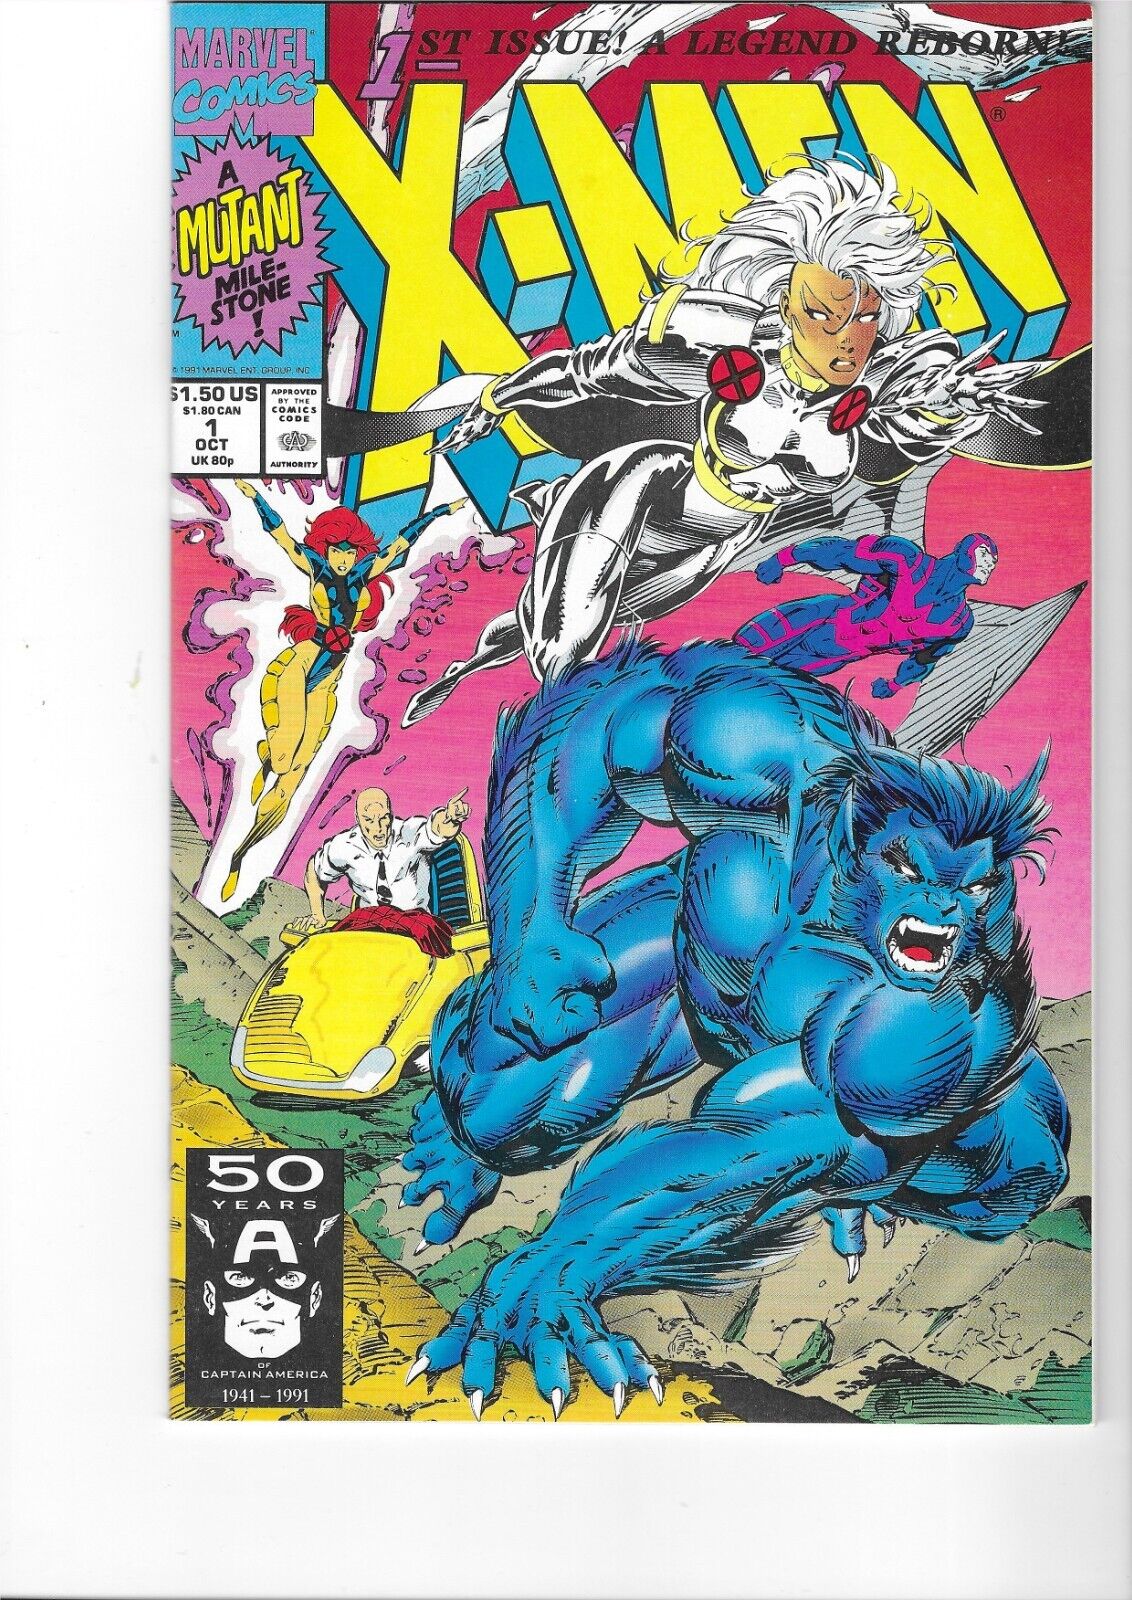 X-MEN #1 (MARVEL Comics 1991) A Legend Reborn (1st Issue) Key Issue NM